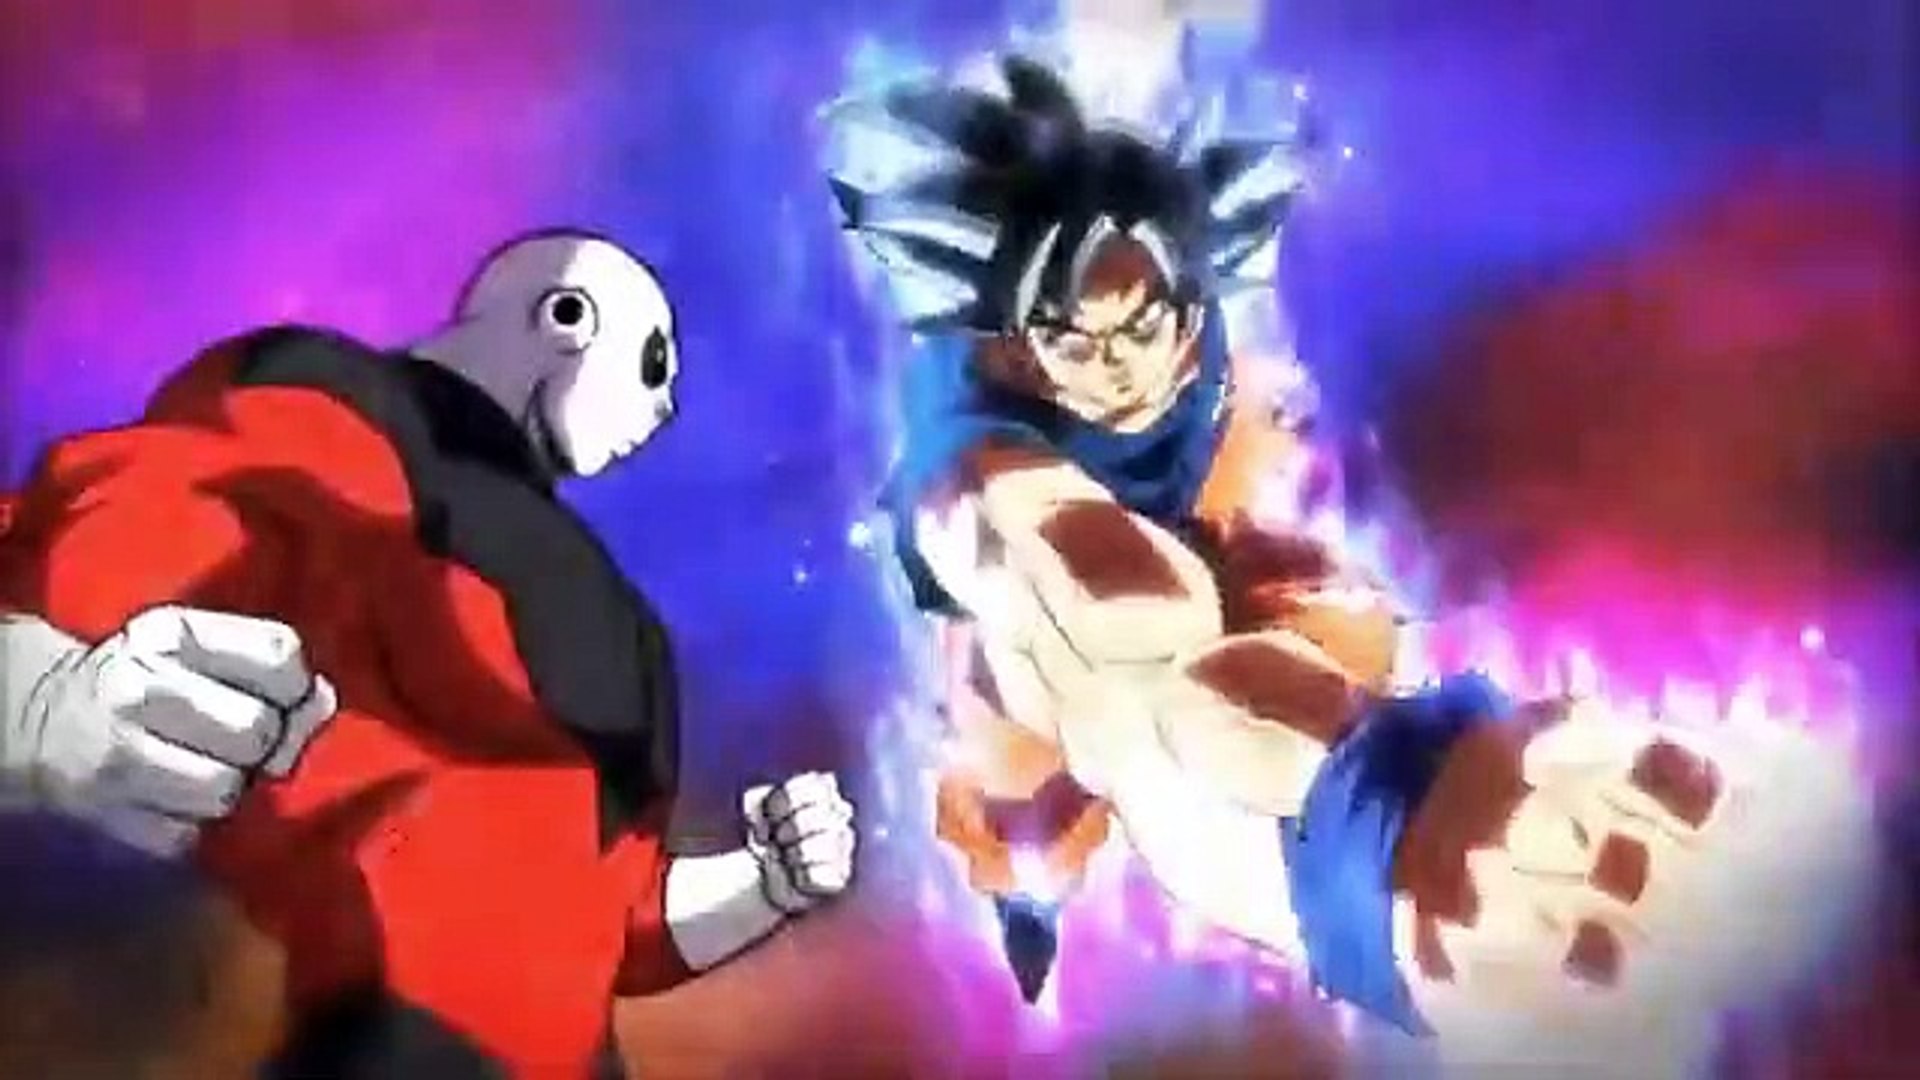 Anime Battle Music no Copyright - Goku VS Jiren - AMV - Vídeo Dailymotion